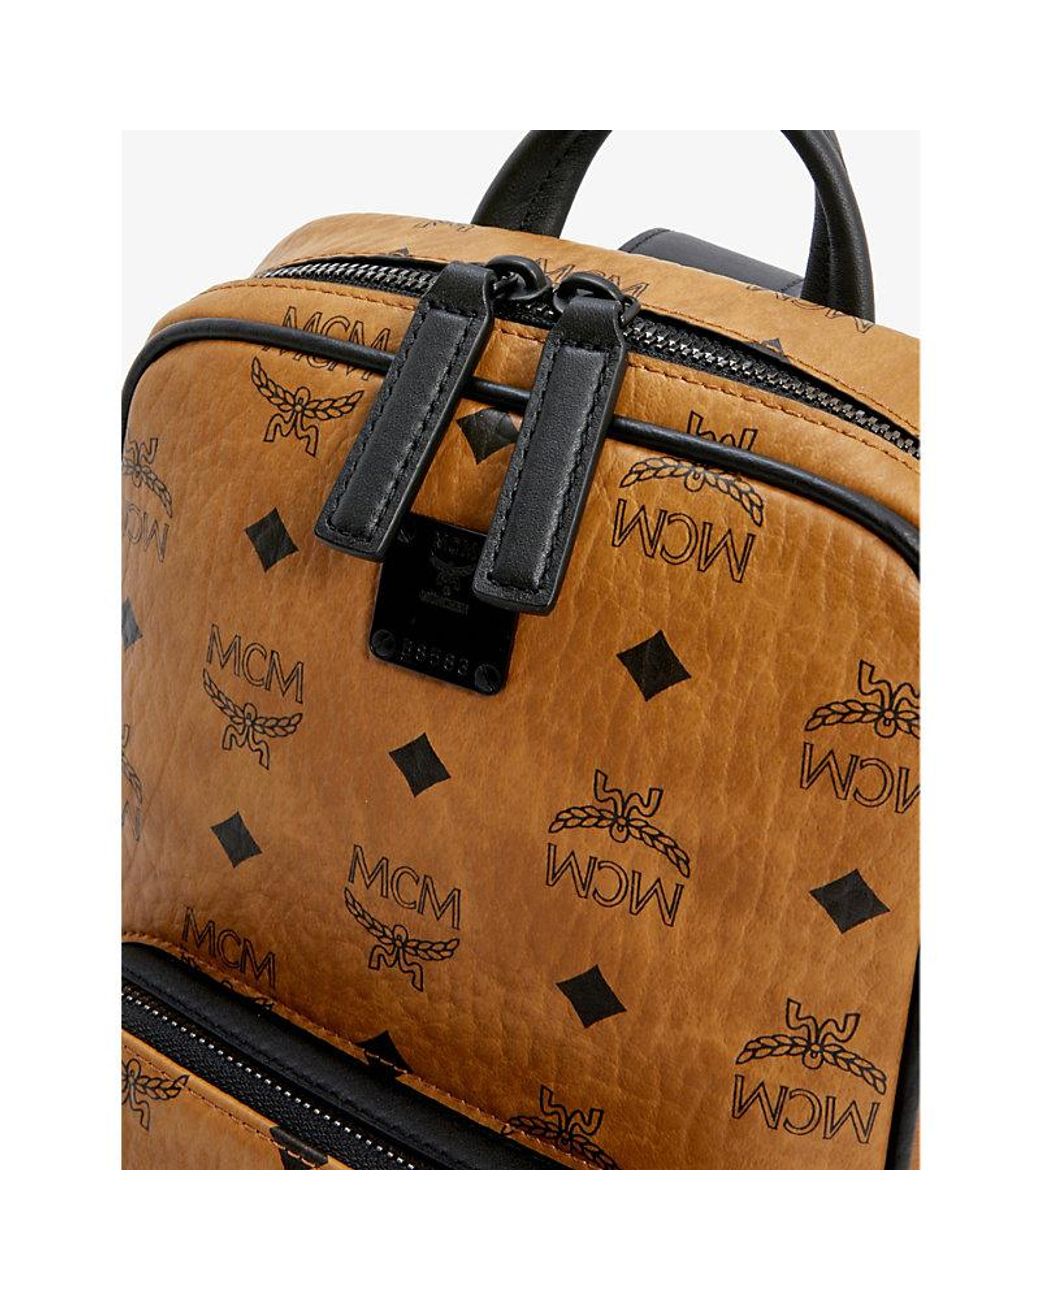 Mcm Men's Aren Maxi Monogram Small Crossbody Bag In Cognac